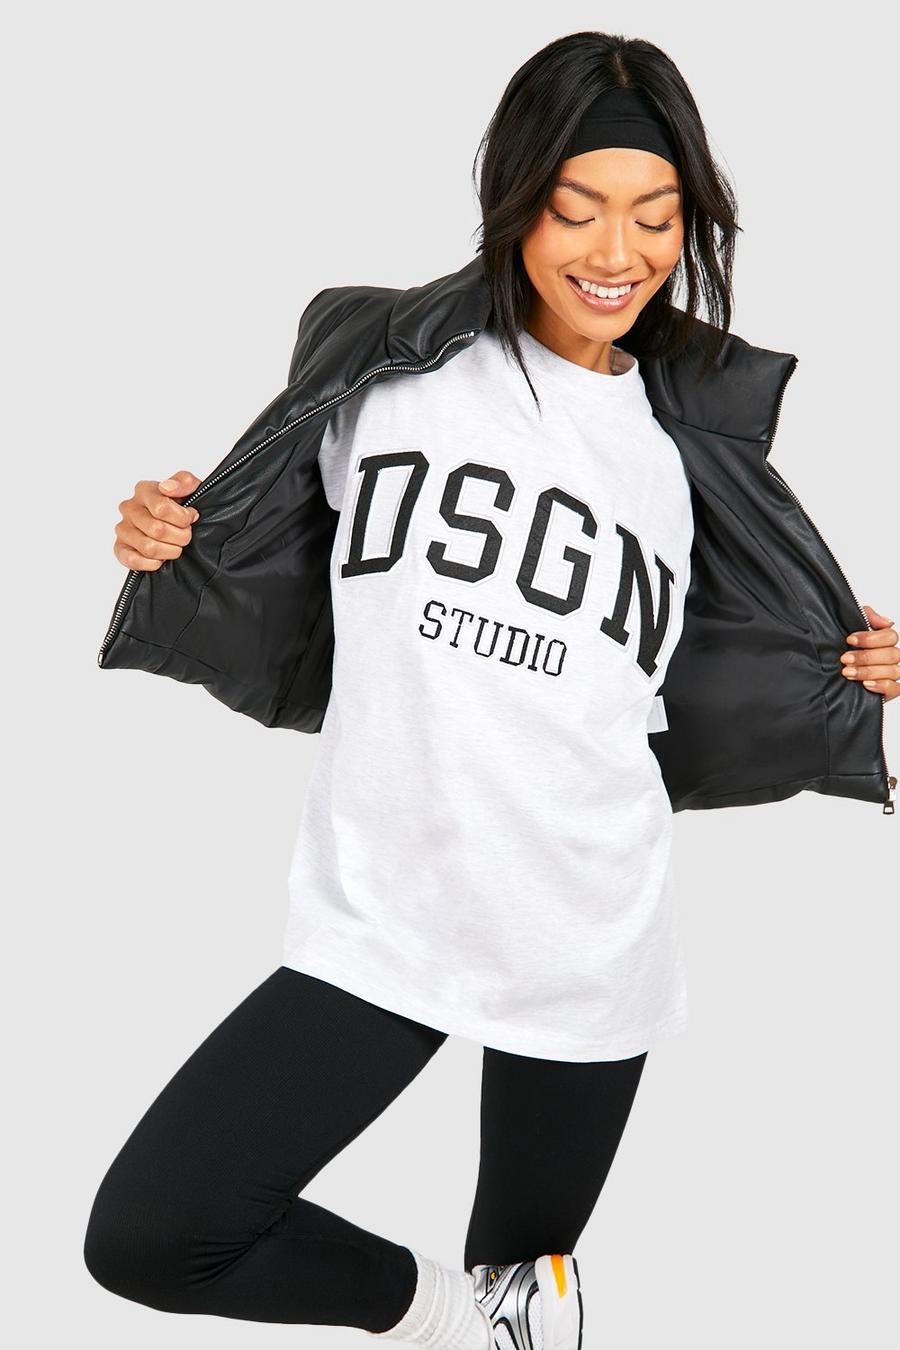 T-shirt oversize à slogan Dsgn Studio, Ash grey image number 1